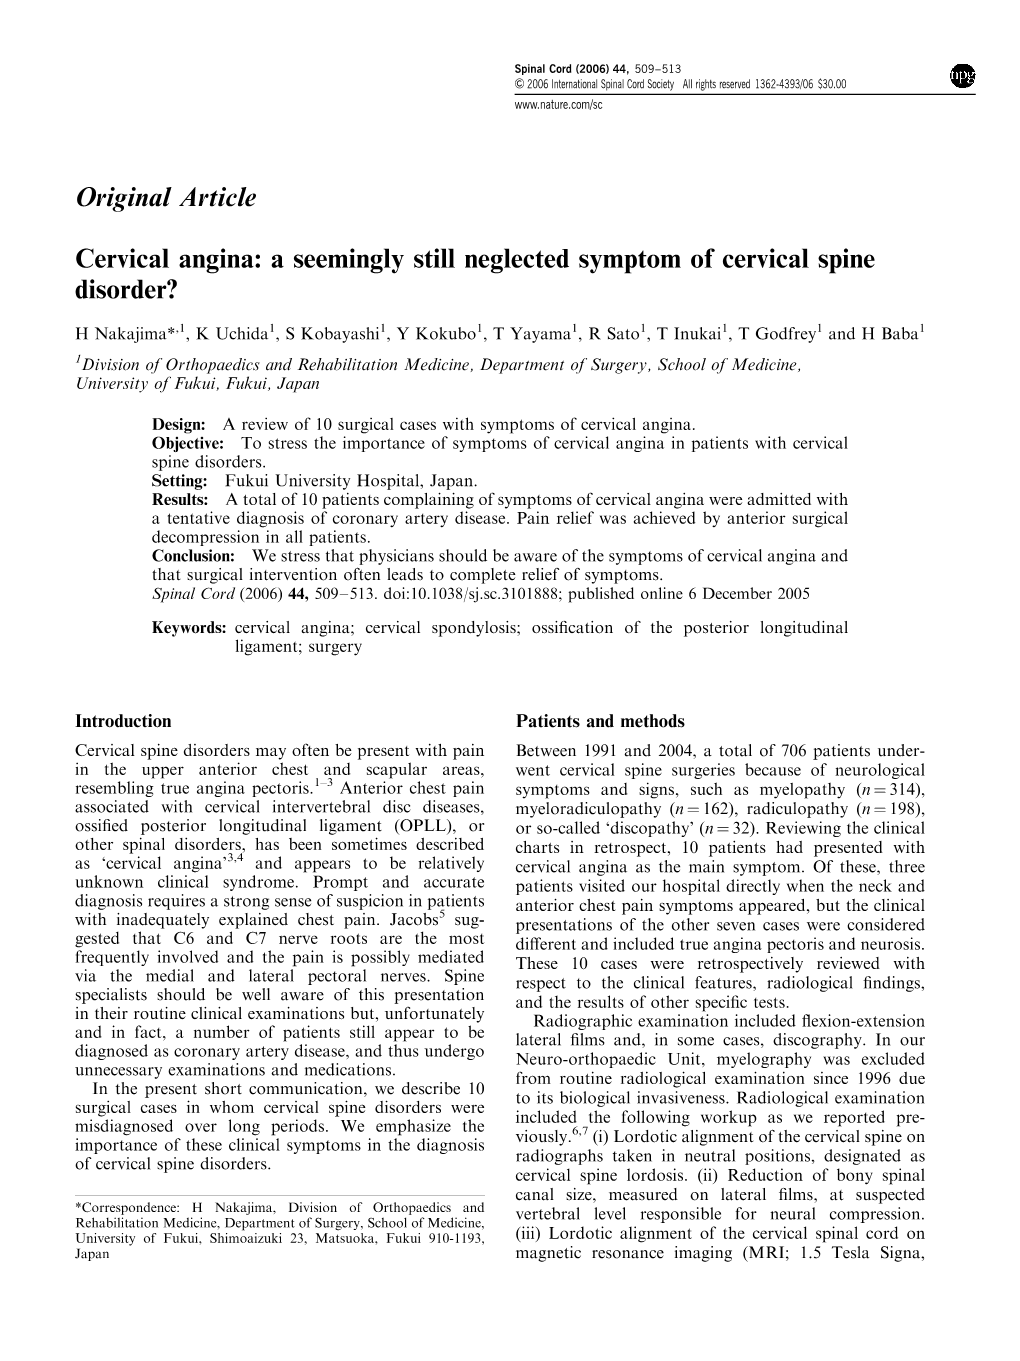 Cervical Angina: a Seemingly Still Neglected Symptom of Cervical Spine Disorder?